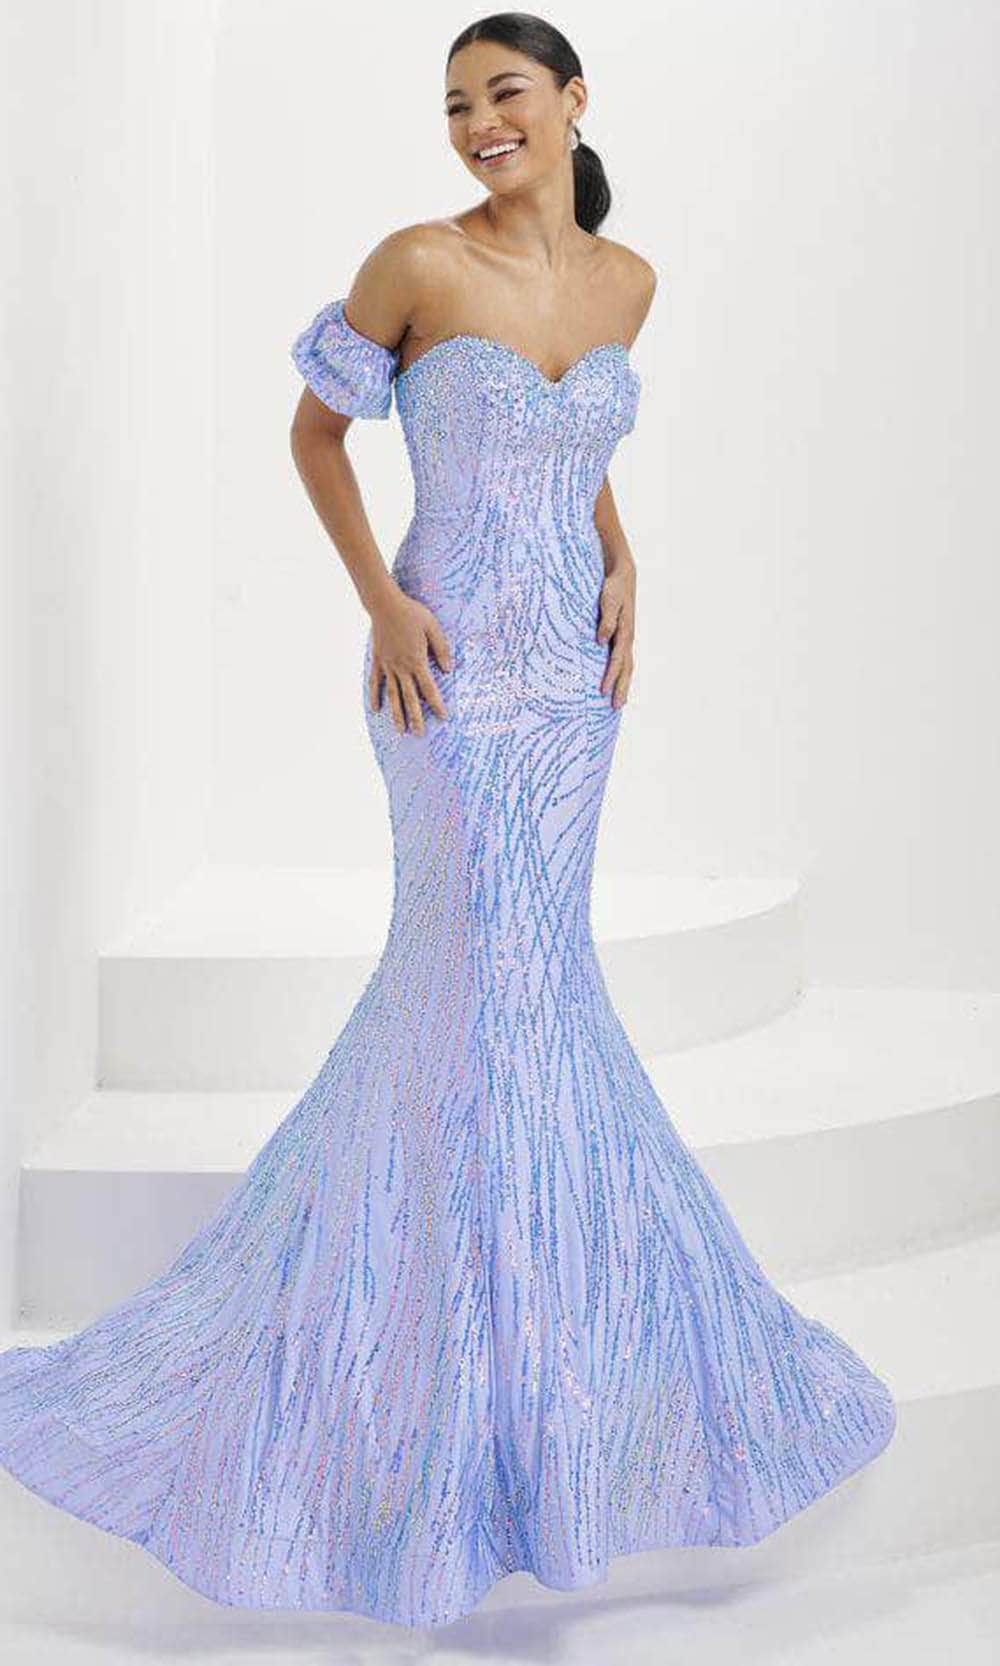 Tiffany Designs 16071 - Sweetheart Swirl Beaded Prom Gown
